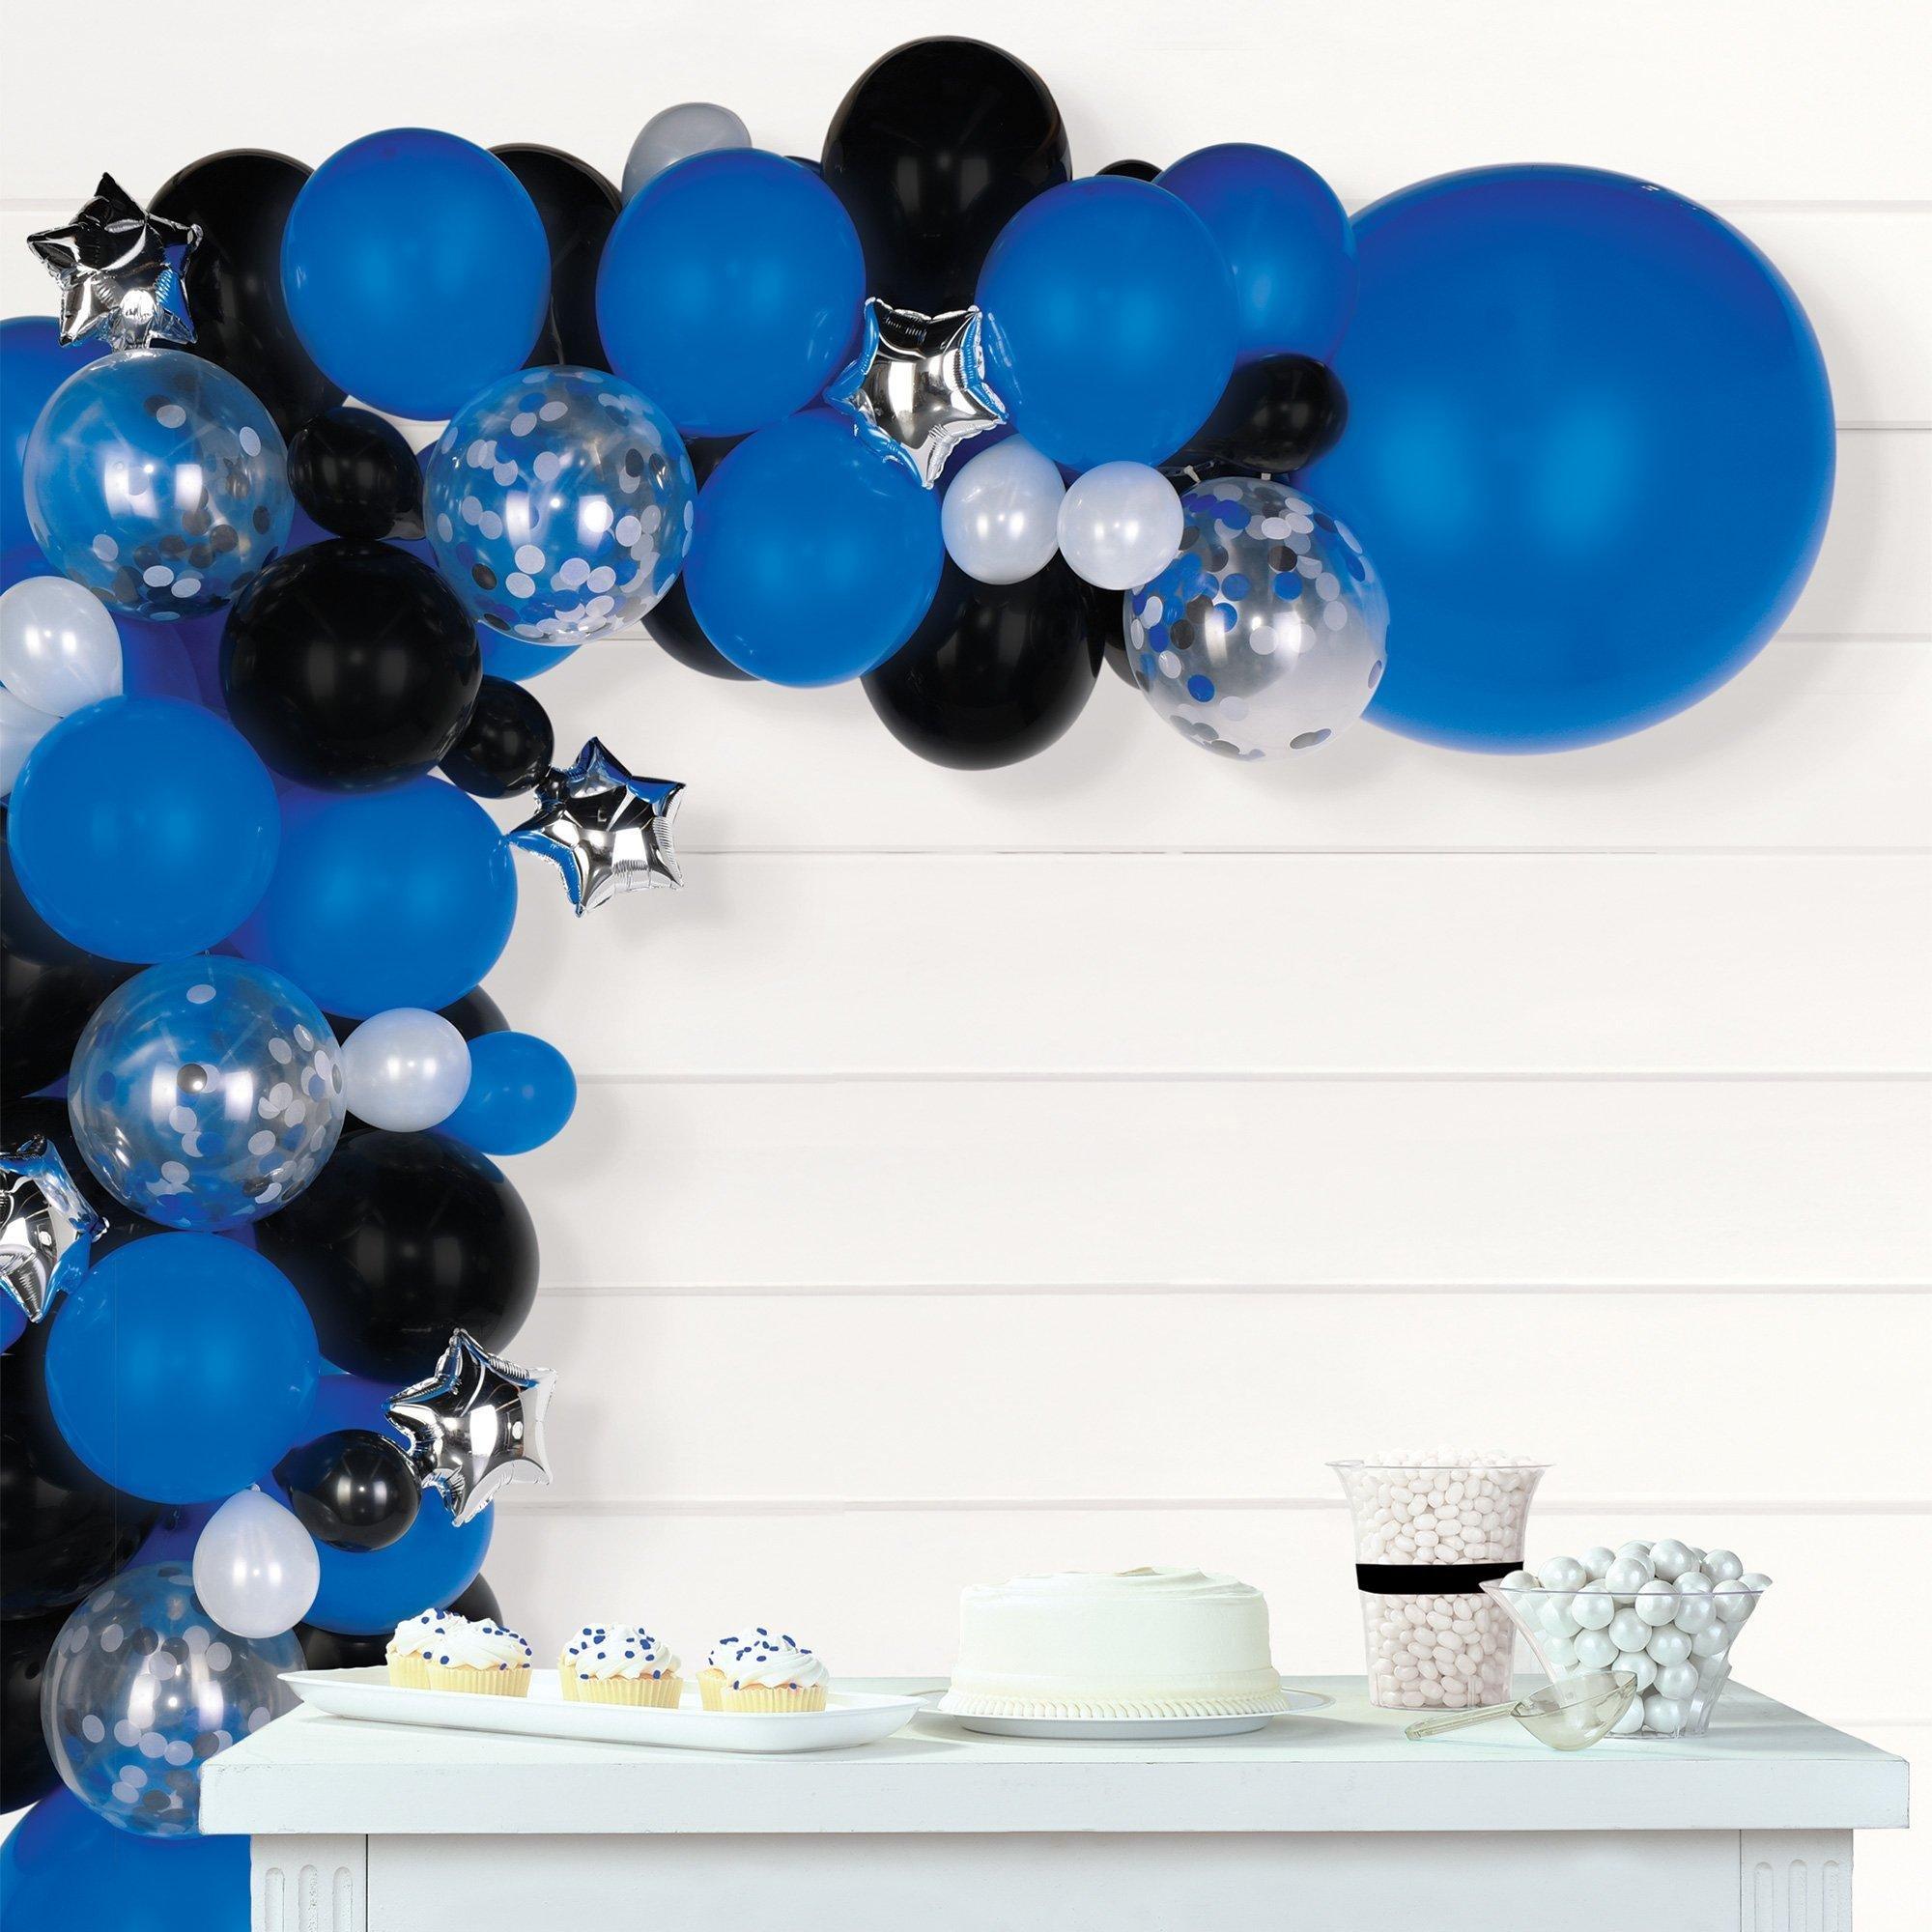 Happy Birthday Decoration Set With White Net Decoration, Blue